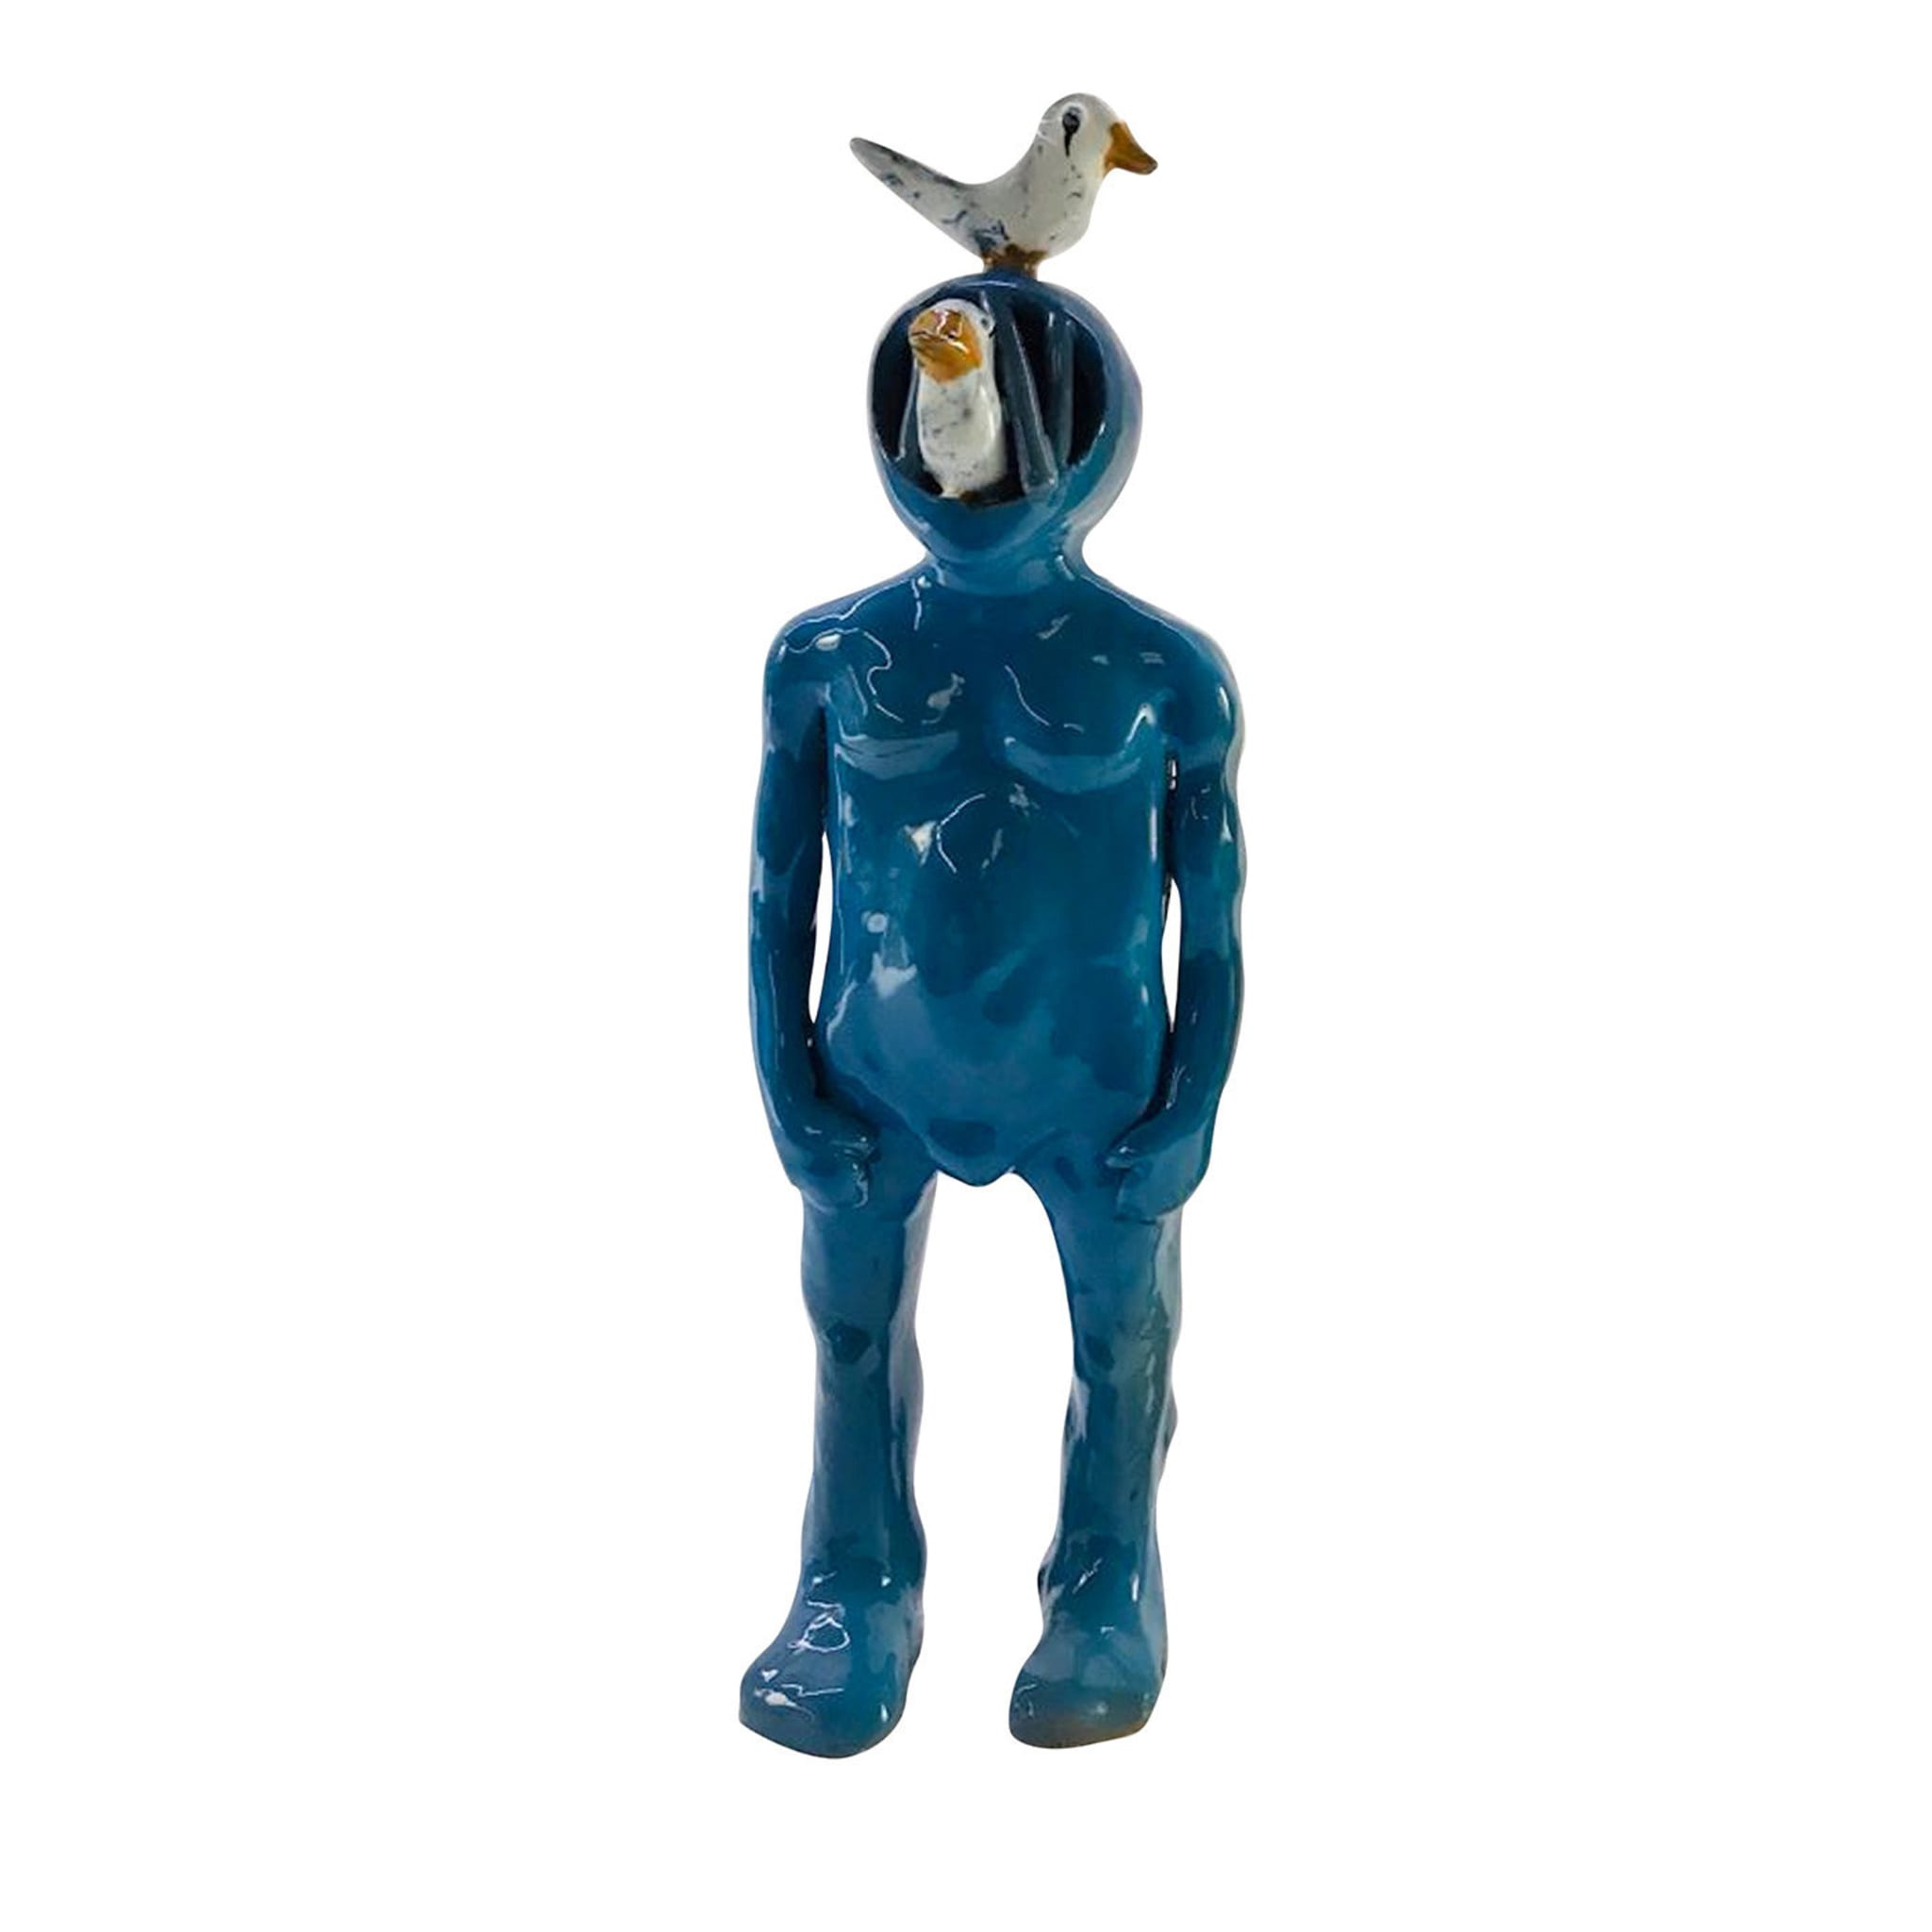 Sculpture de plongeur bleu - Vue principale